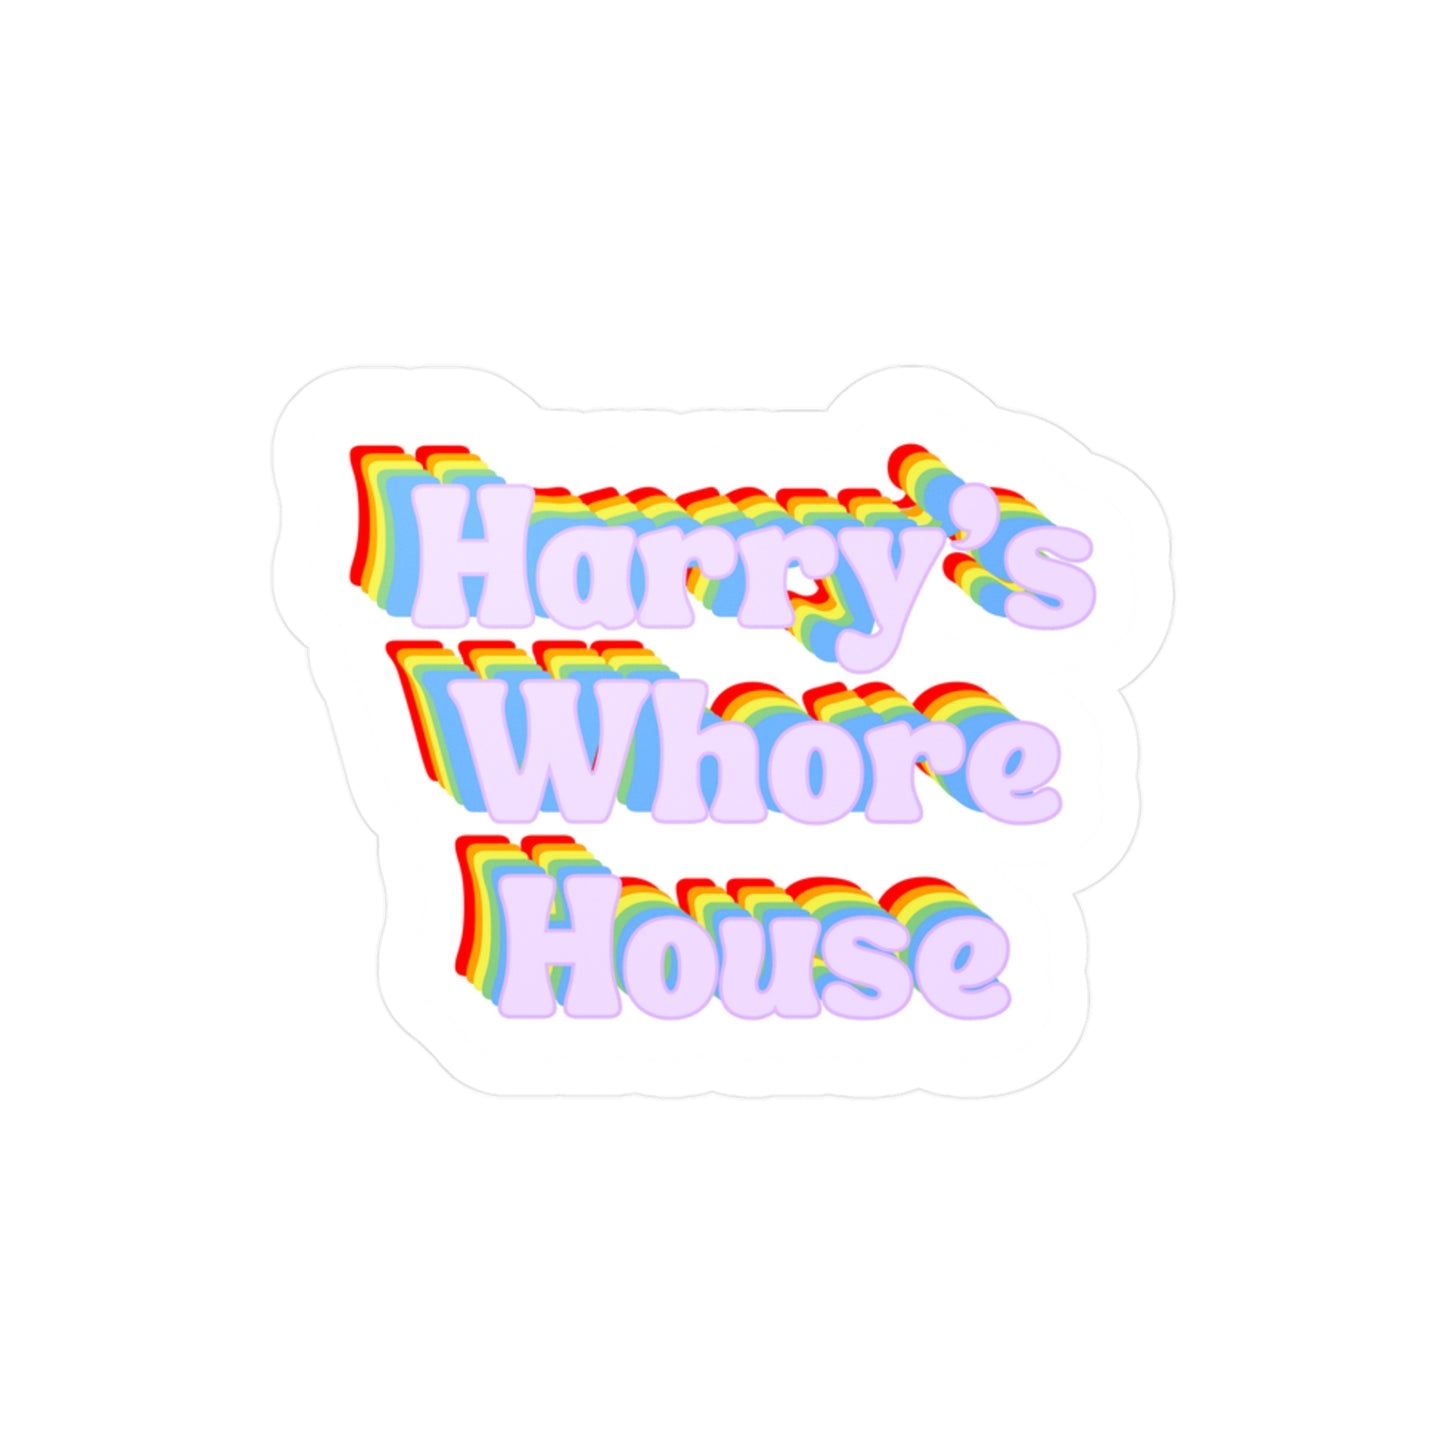 Harry's Whore House